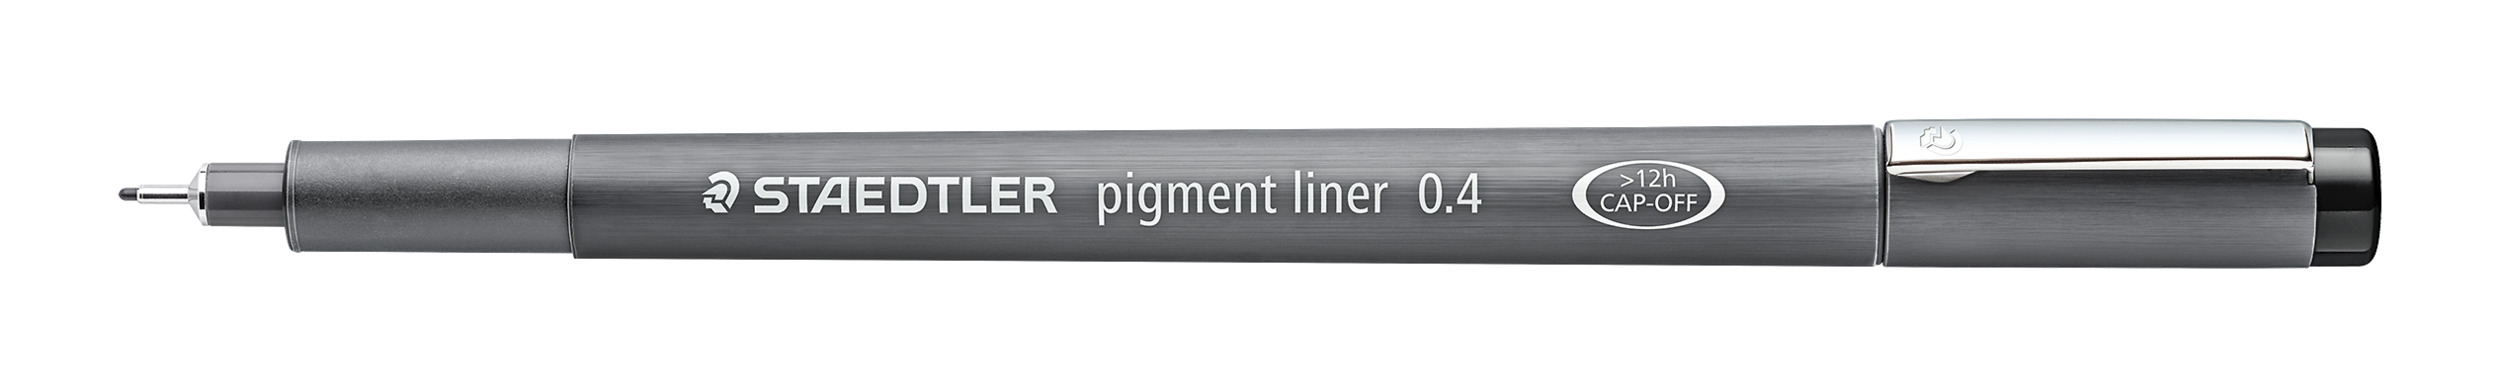 Pigment liner 0.4mm